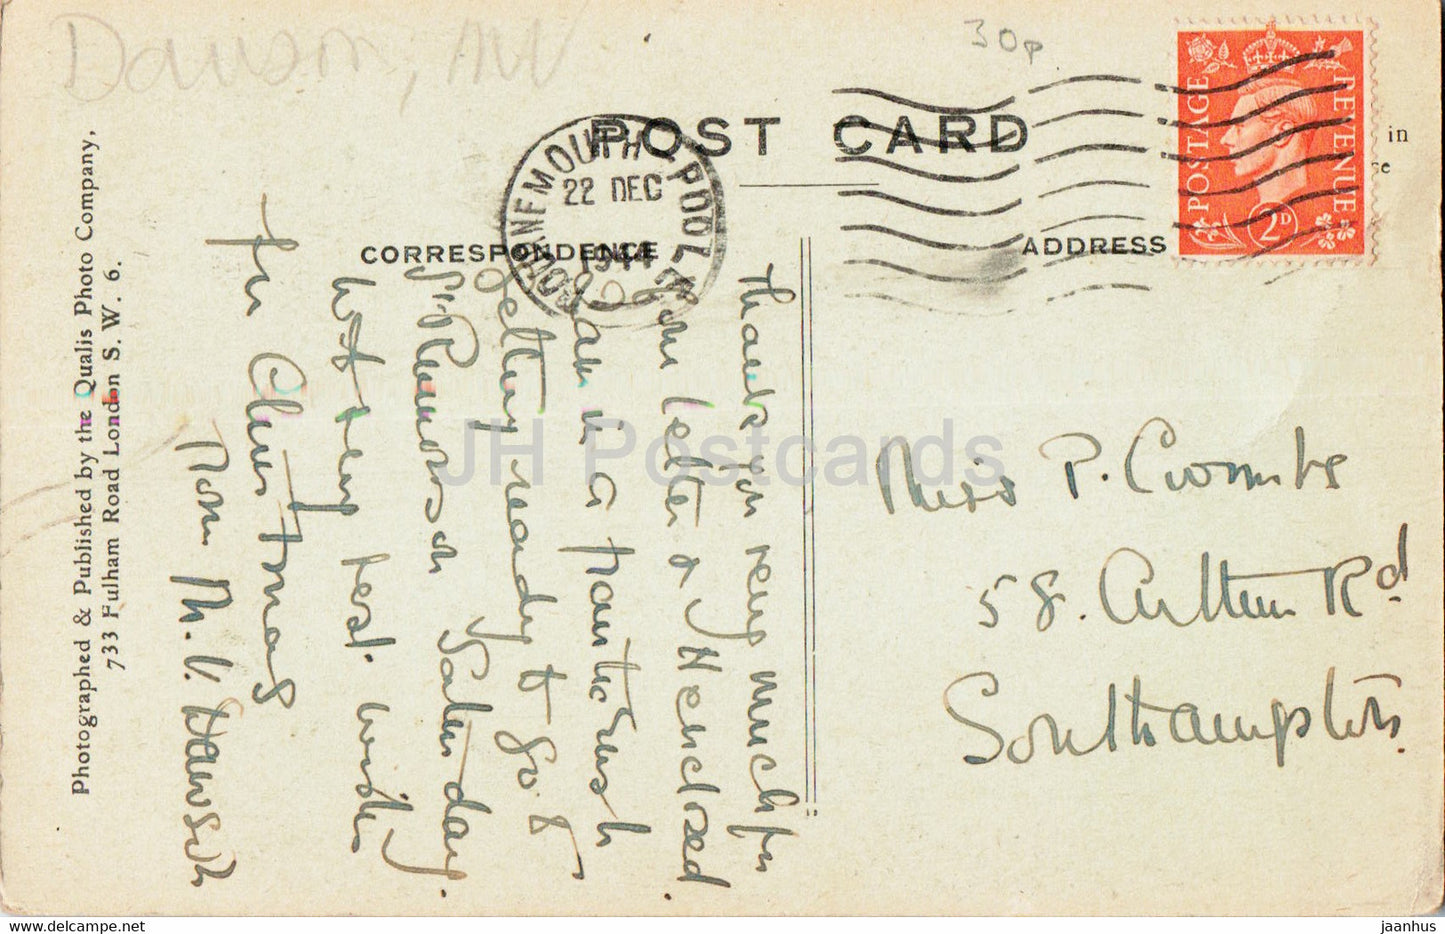 The Beeches - carte postale ancienne - 1944 - Angleterre - Royaume-Uni - utilisé